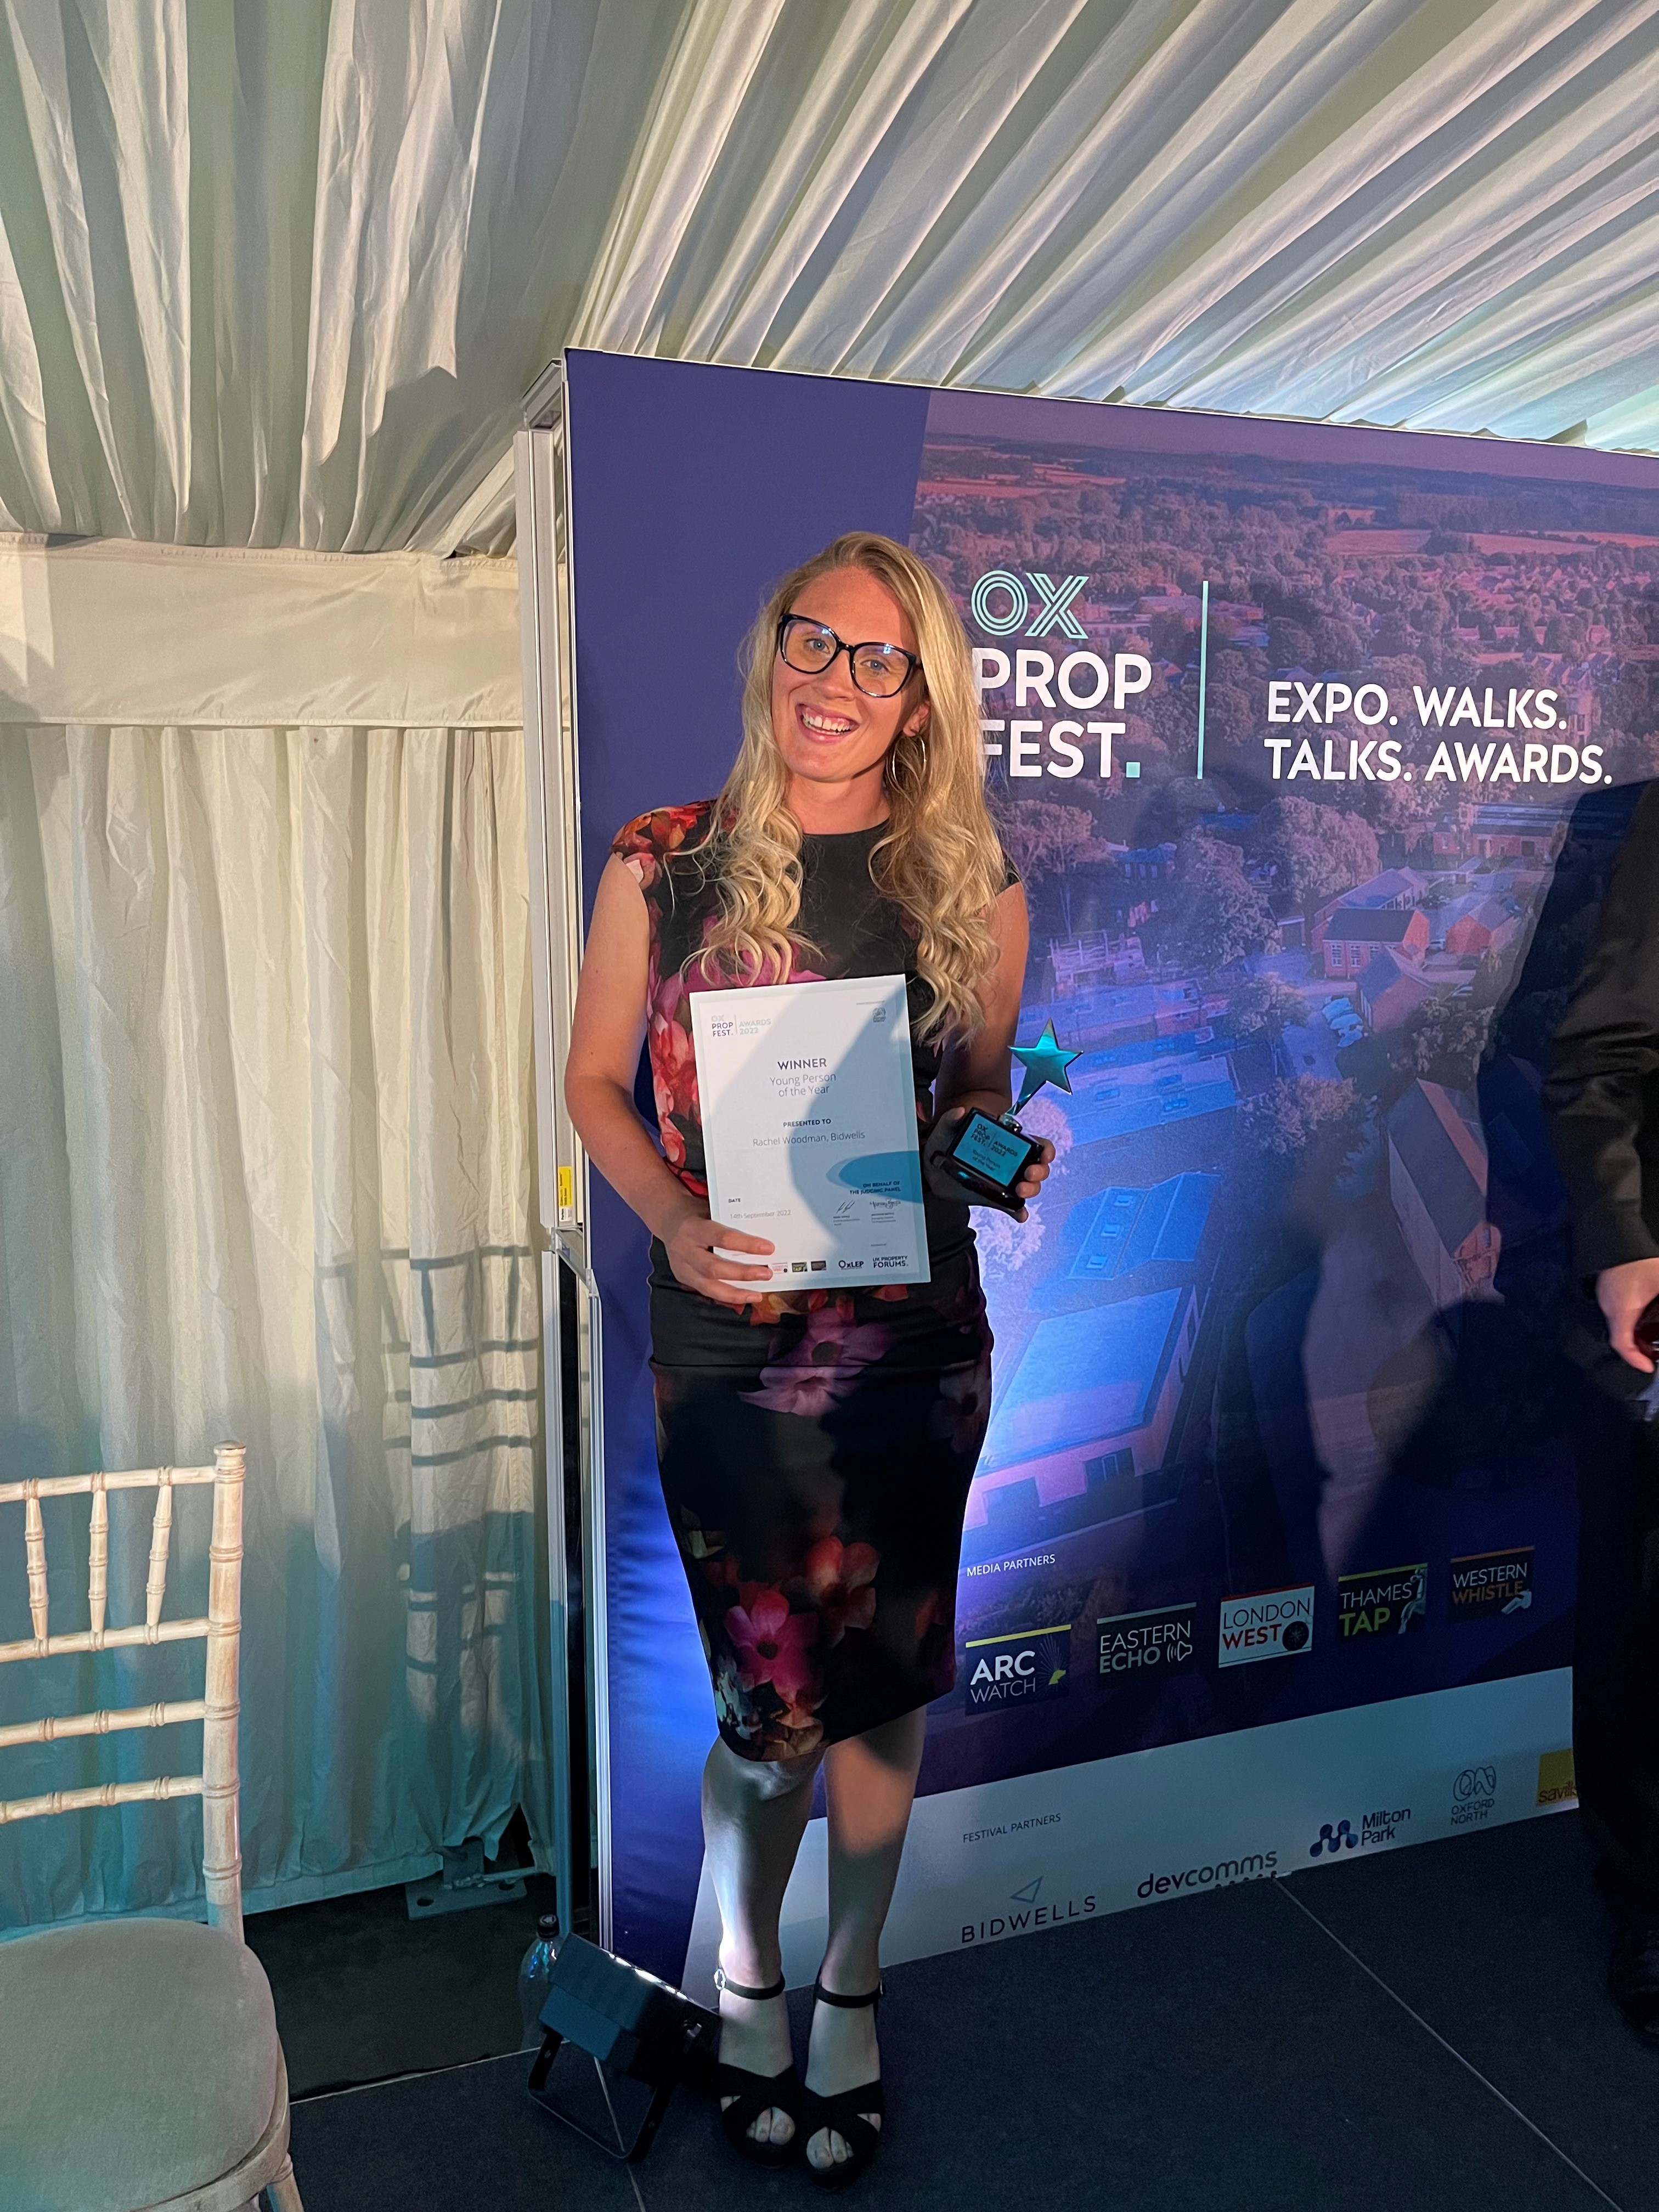 Rachel Woodman Named Winner at Oxford Property Awards